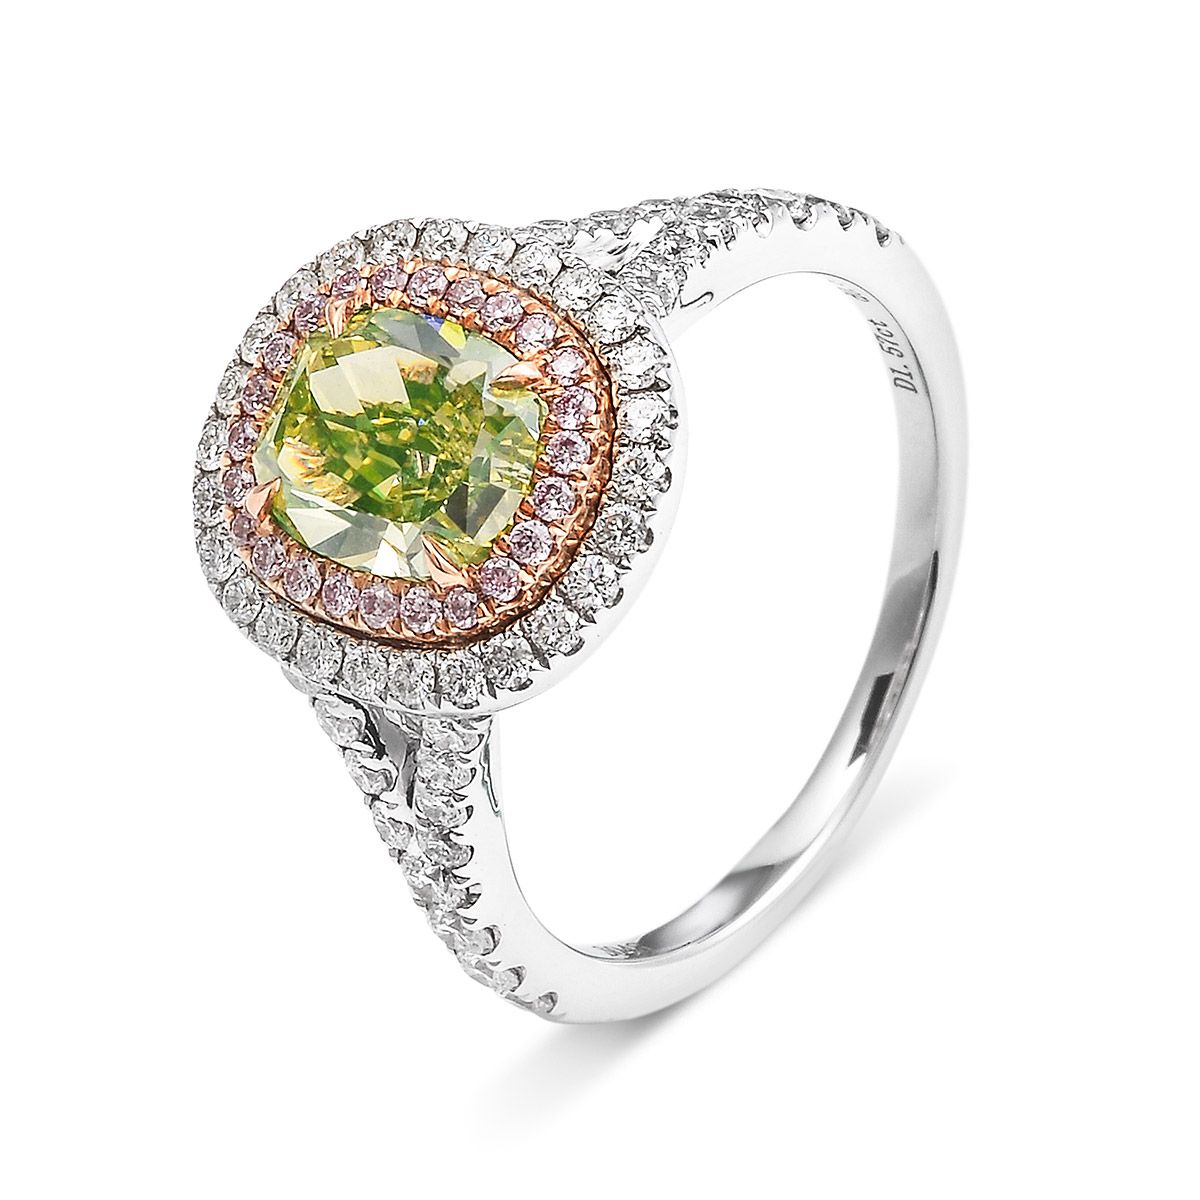 Fancy Intense Greenish Yellow Diamond Ring, 1.57 Ct. (2.59 Ct. TW), Cushion shape, GIA Certified, 1176178213